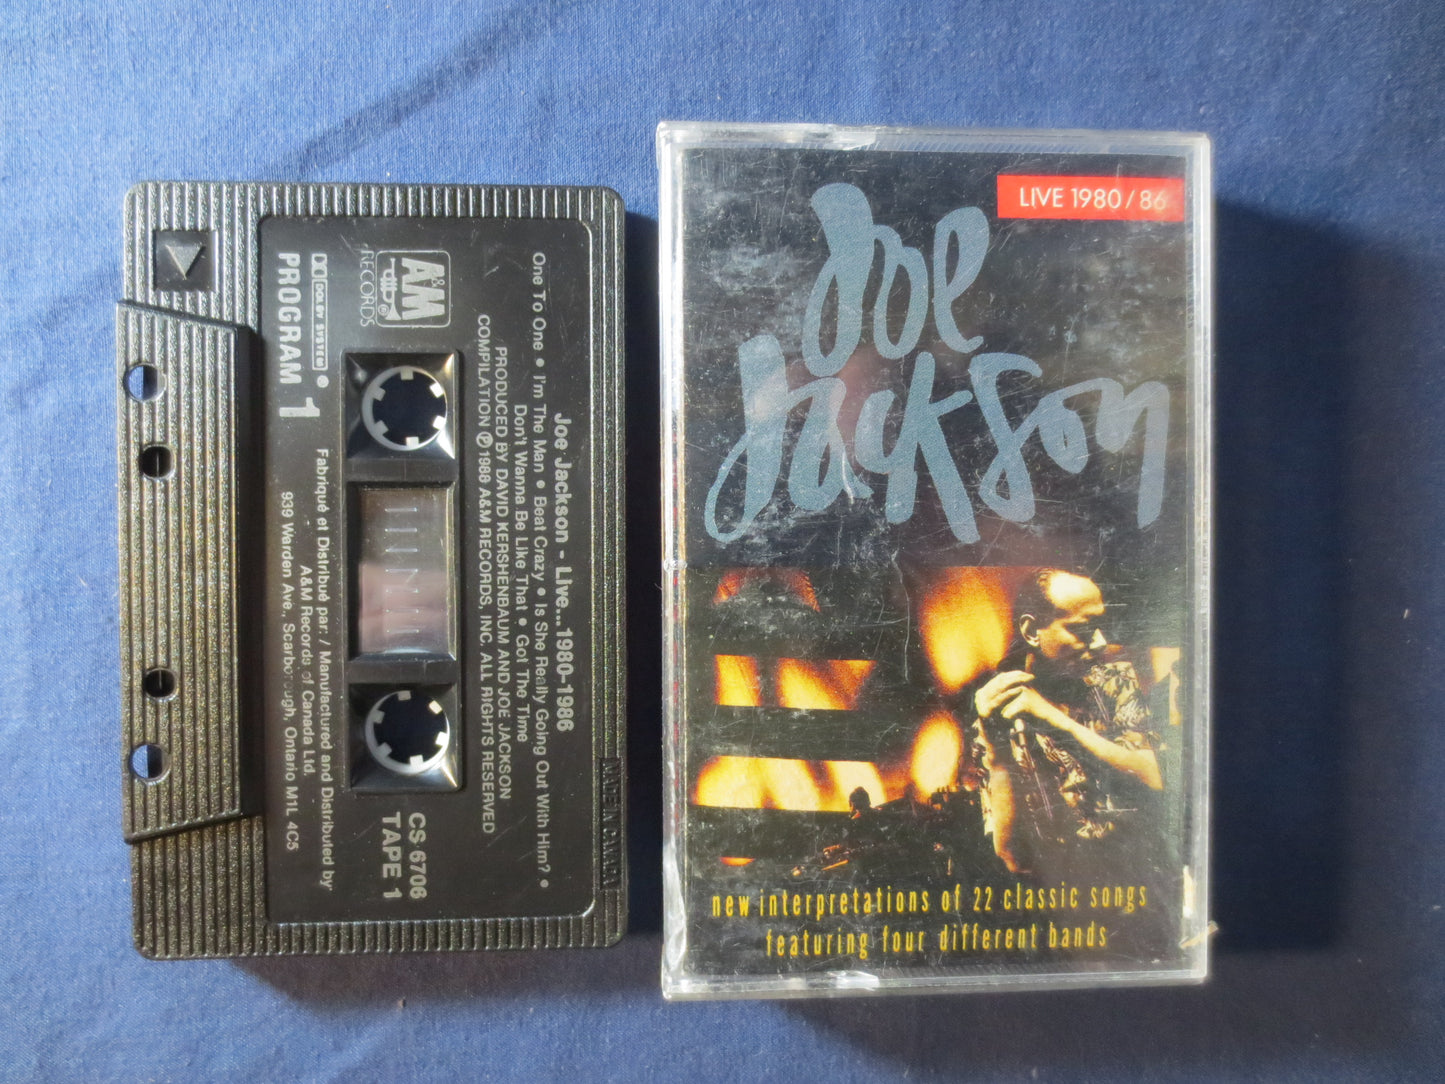 JOE JACKSON Tape, LIVE Tape, Joe Jackson Album, Joe Jackson Music, Joe Jackson Song, Tape Cassette, Cassette, 1988 Cassette